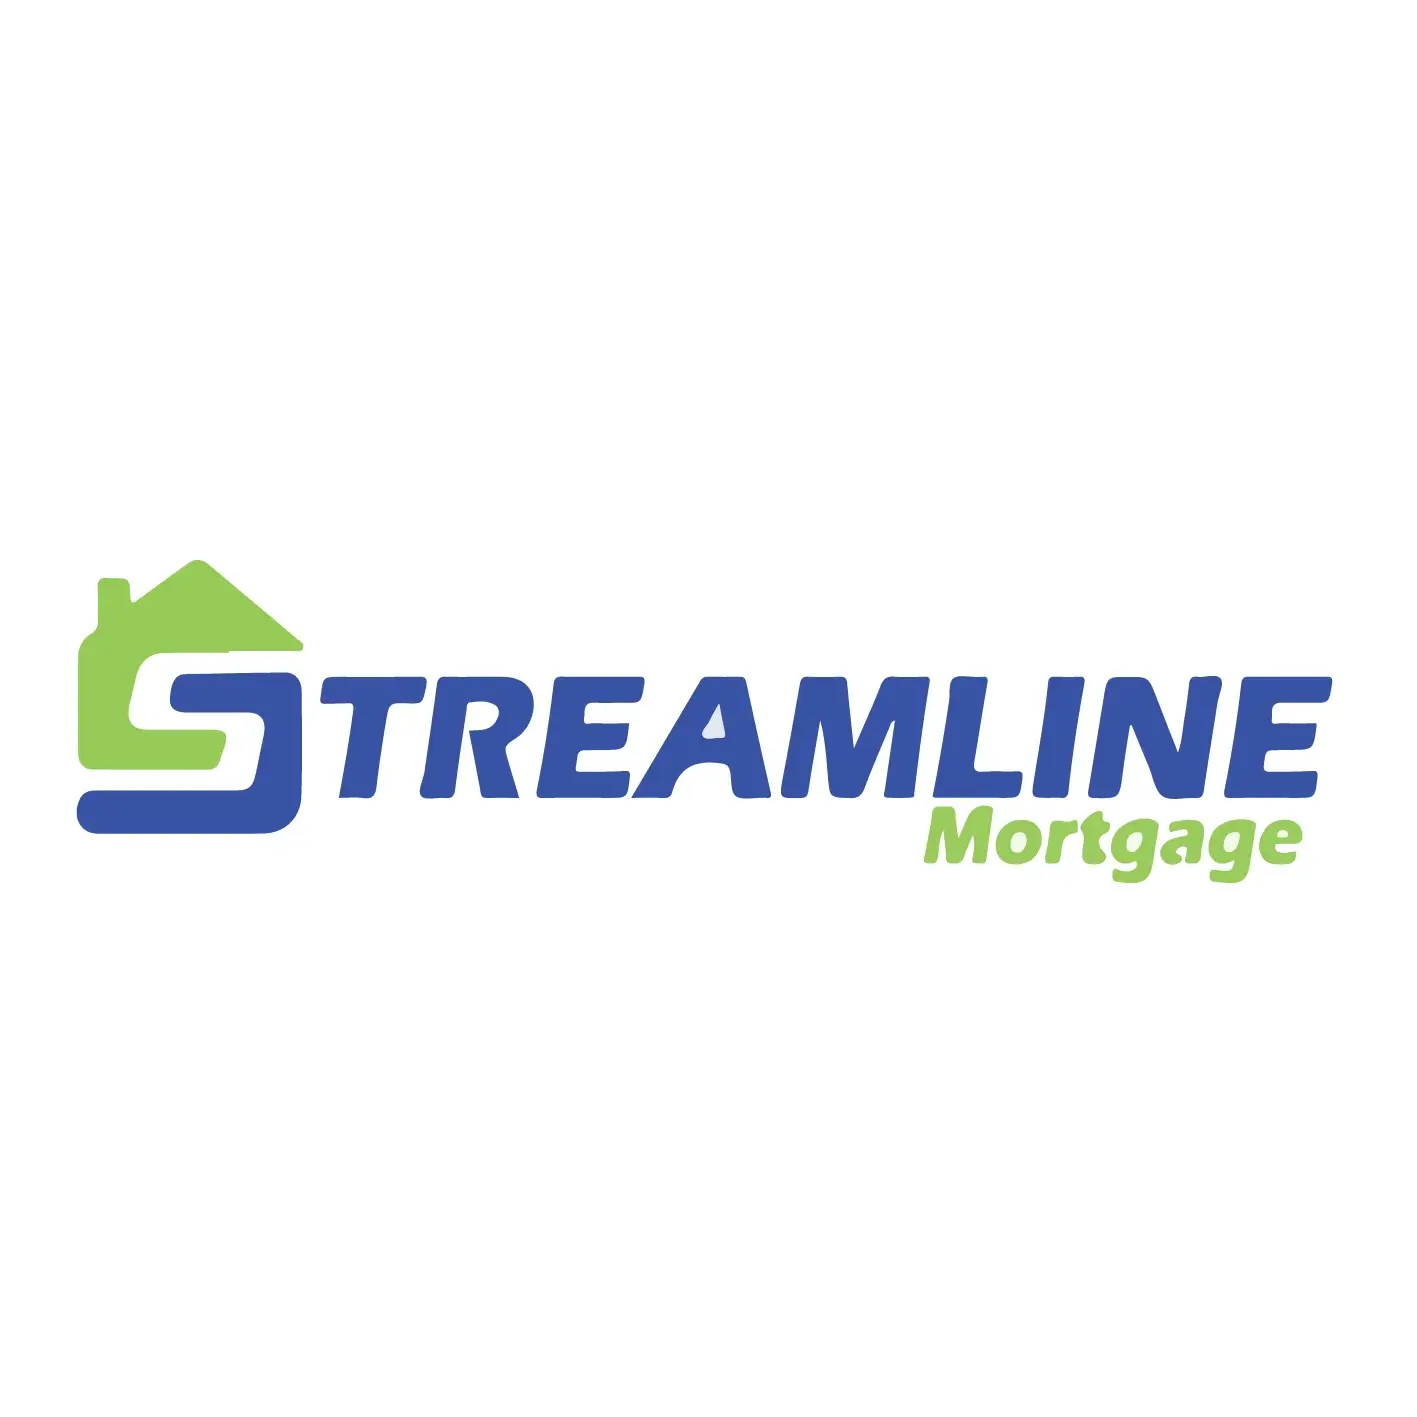 Streamline Mortgage Corporation